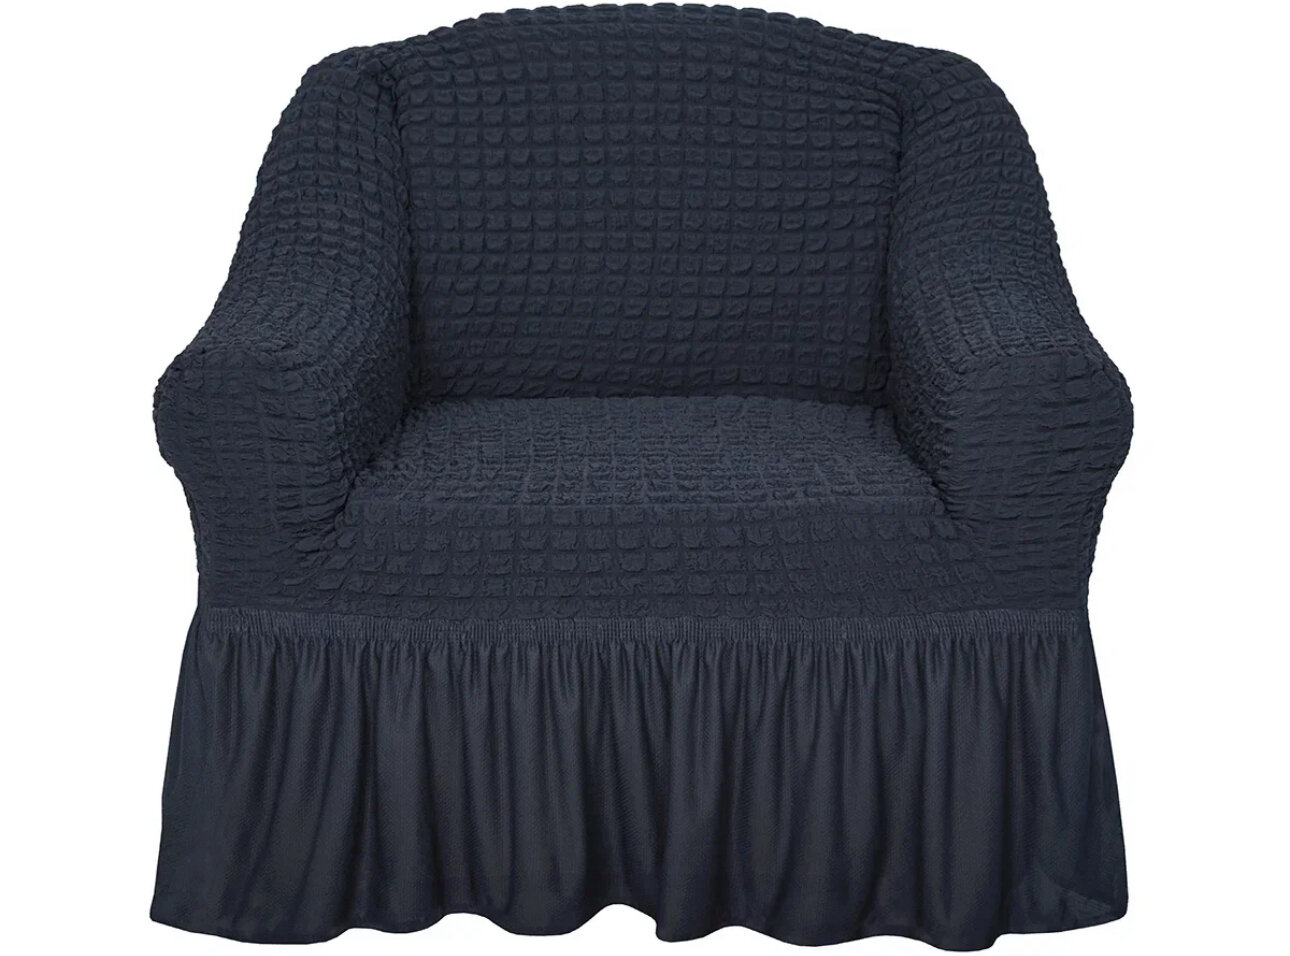 Чехол на кресло с юбкой, универсальный чехол на кресло с юбкой